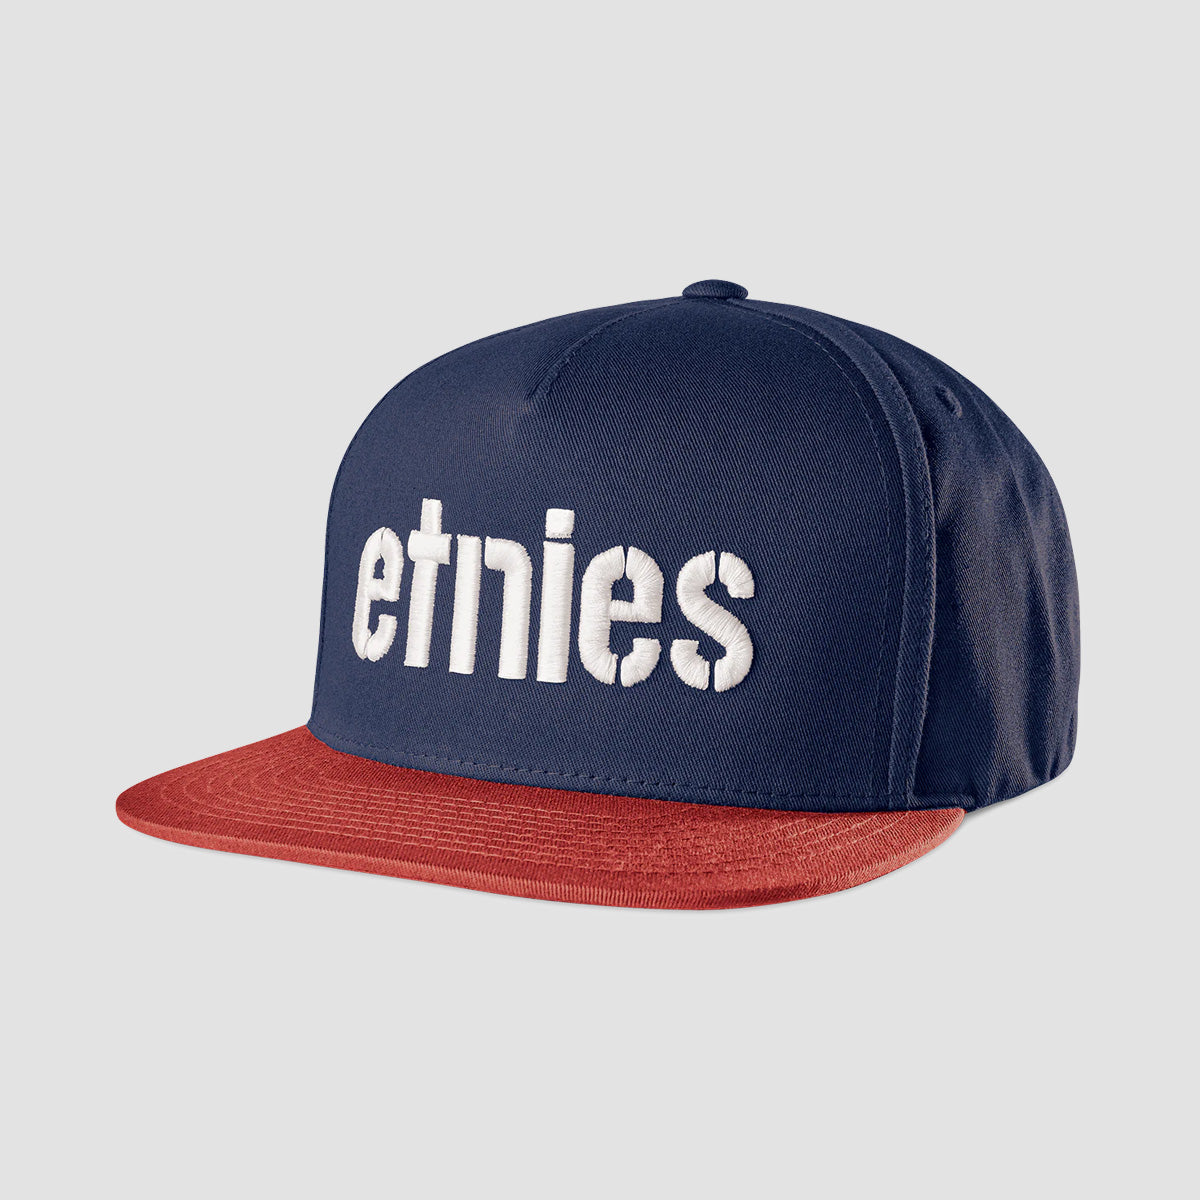 Etnies Corp Snapback Cap Navy/Red/White